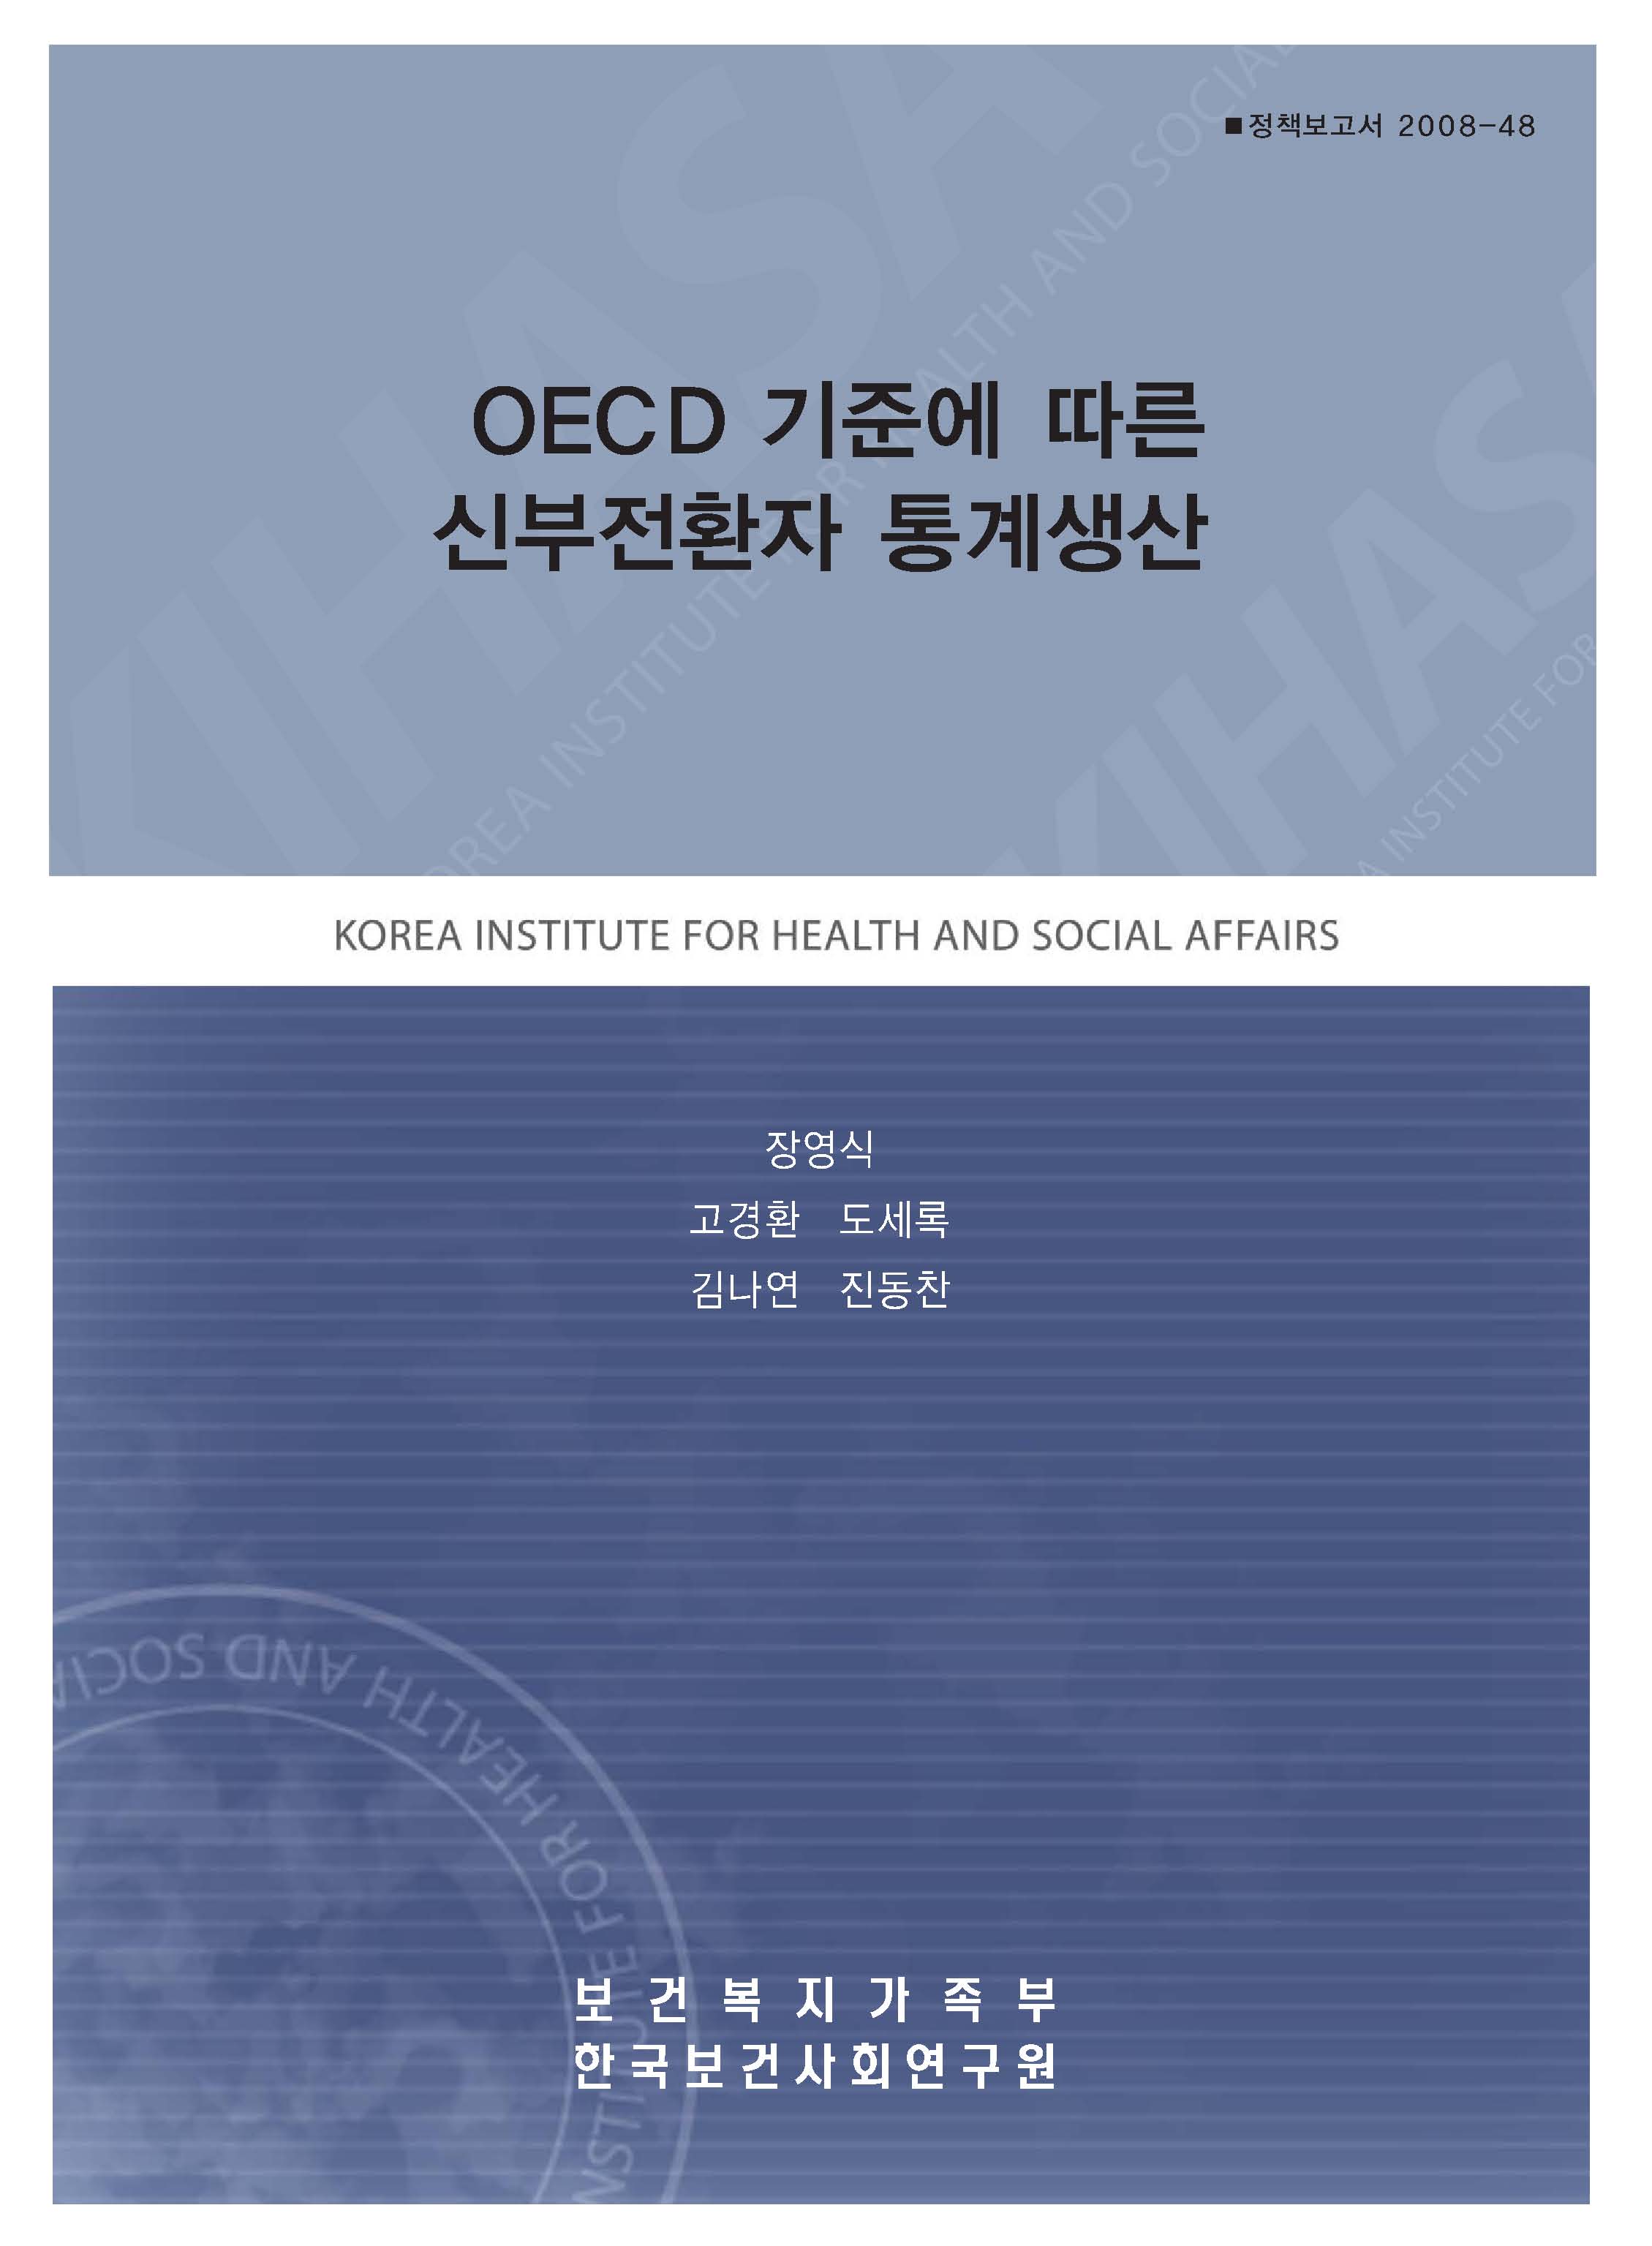 OECD 기준에 따른 신부전환자 통계생산